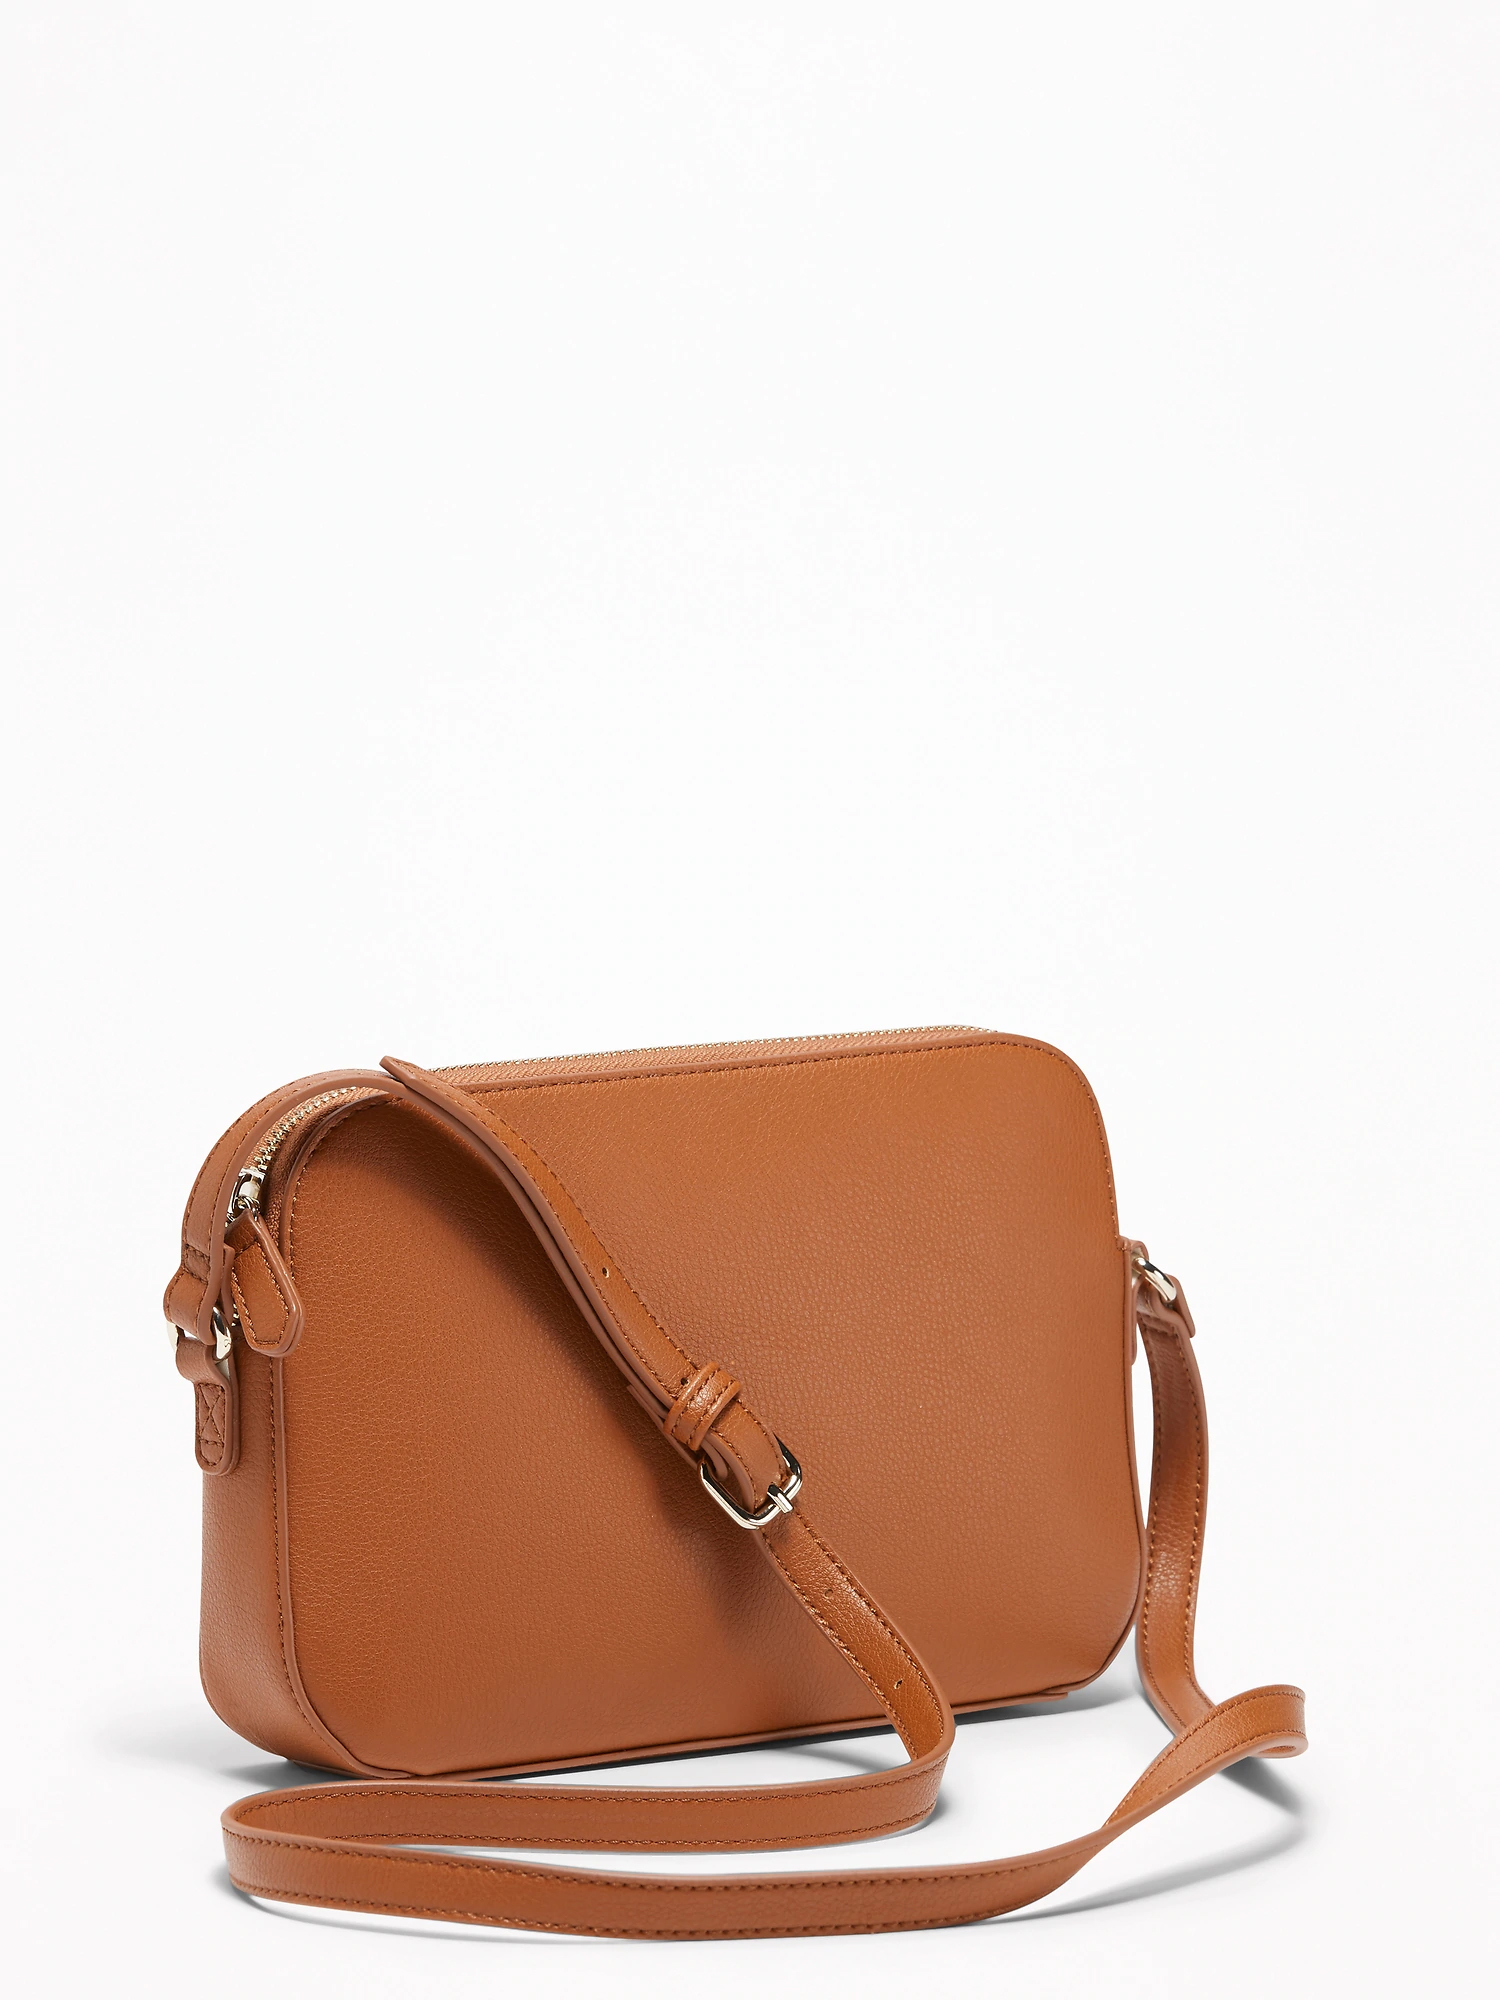 Faux-Leather Cross-Body Bag for Women - Cognac Brown